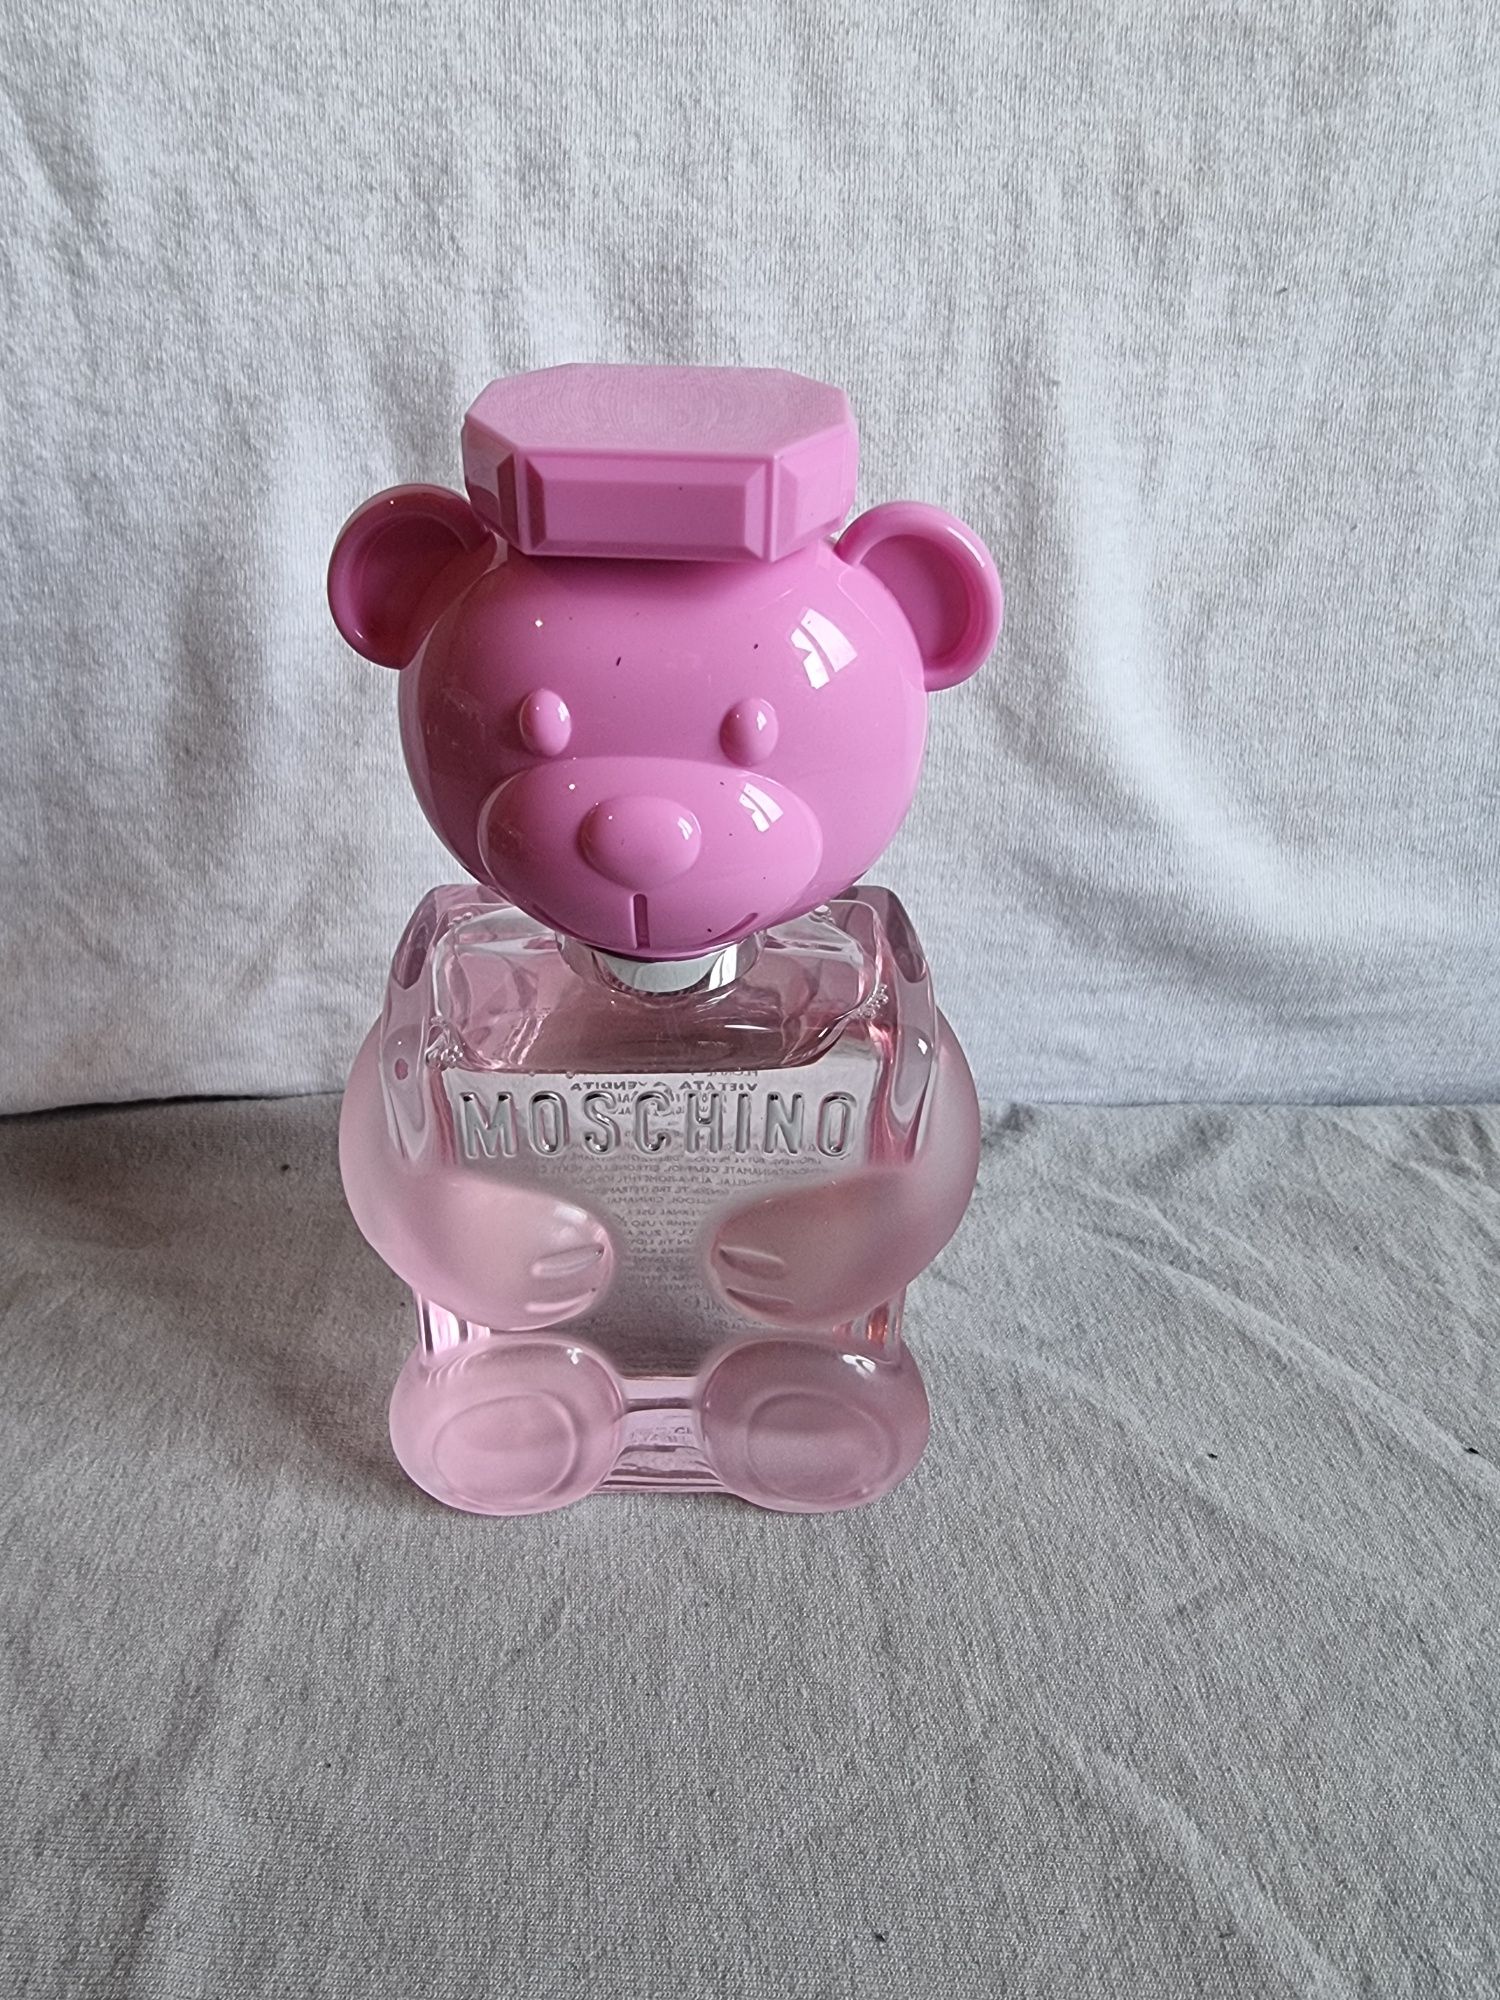 Moschino Toy 2 Bubble Gum- туалетная вода 100мл, оригинал.